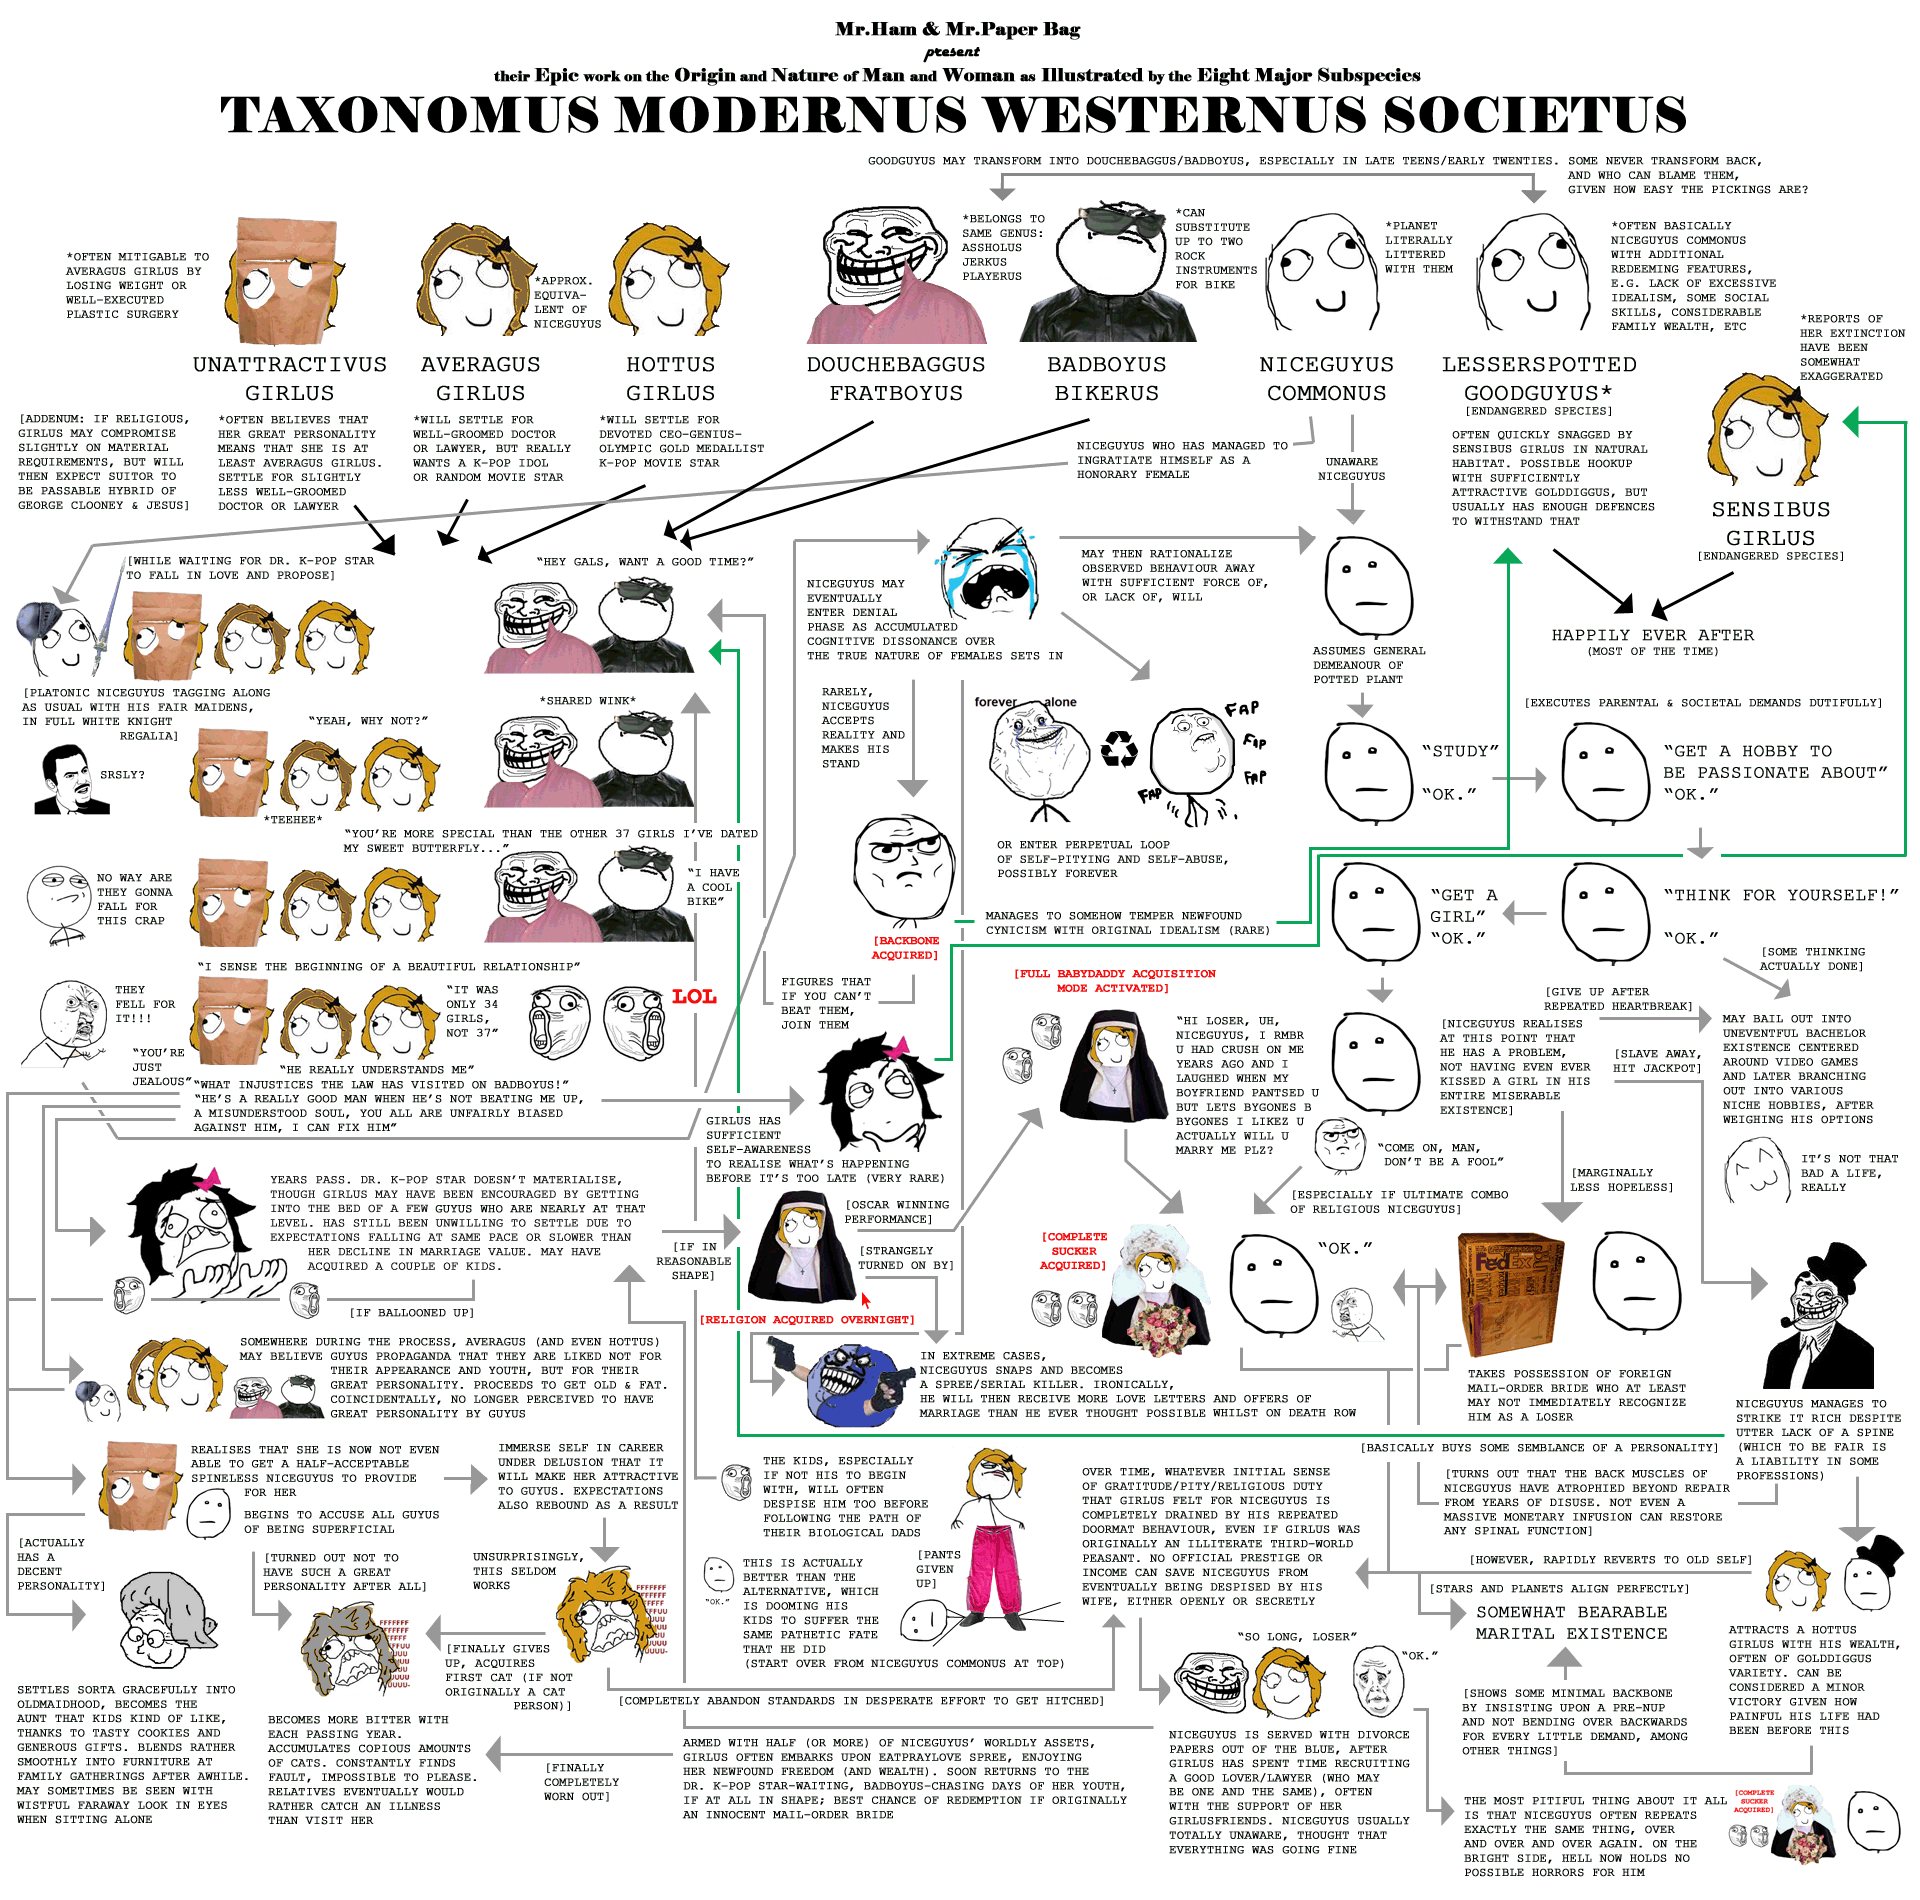 Taxonomus Modernus Westernus Societus  Infographic